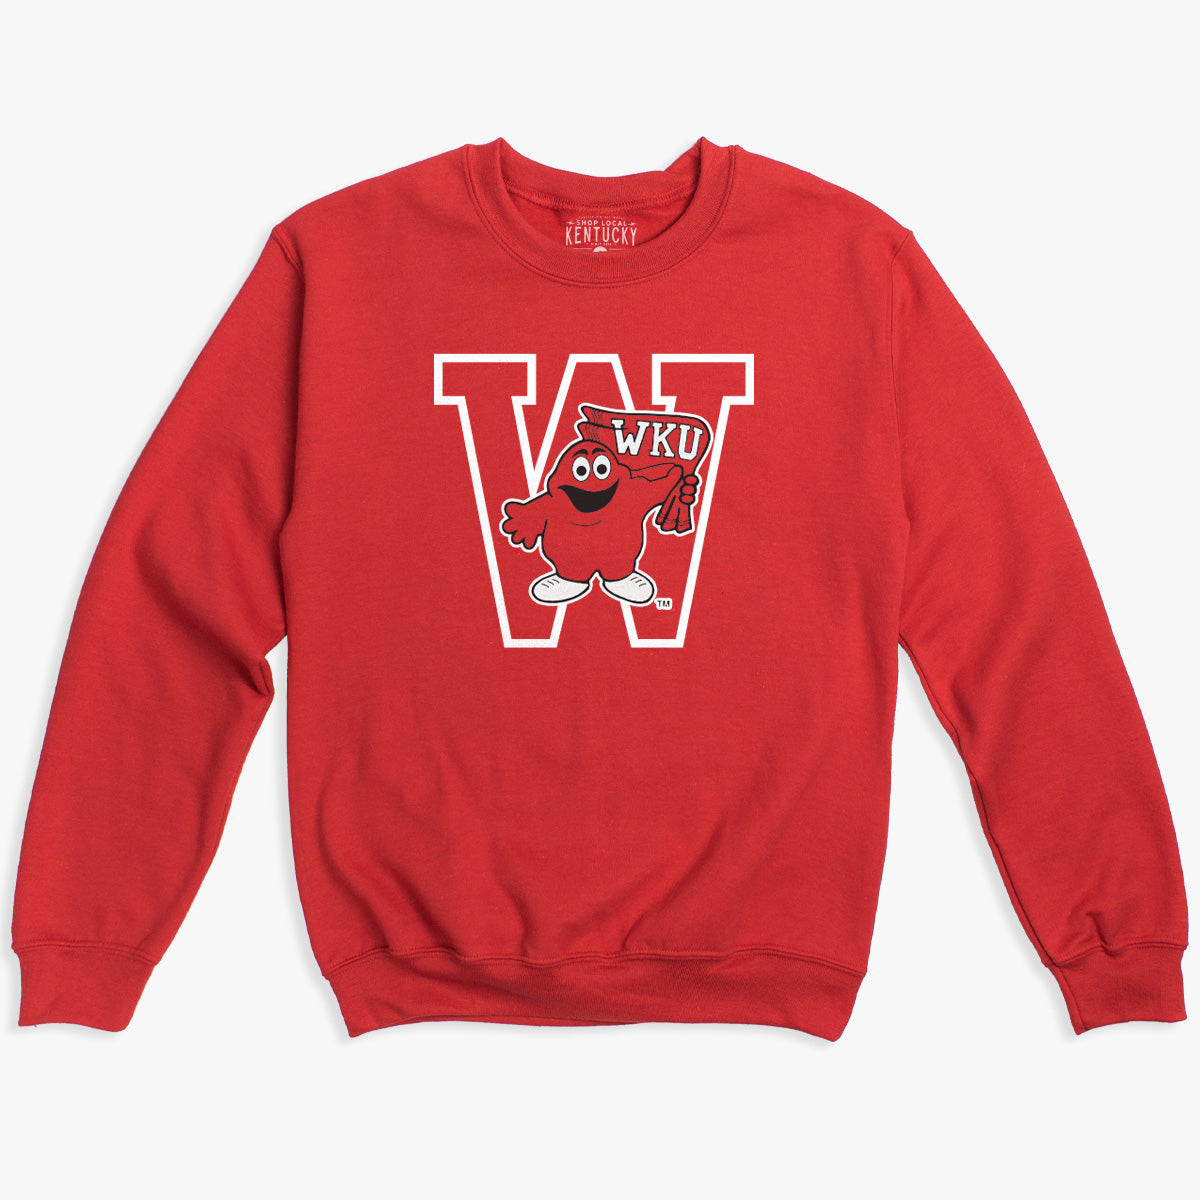 The Vintage Varsity Big Red Crewneck Sweatshirt